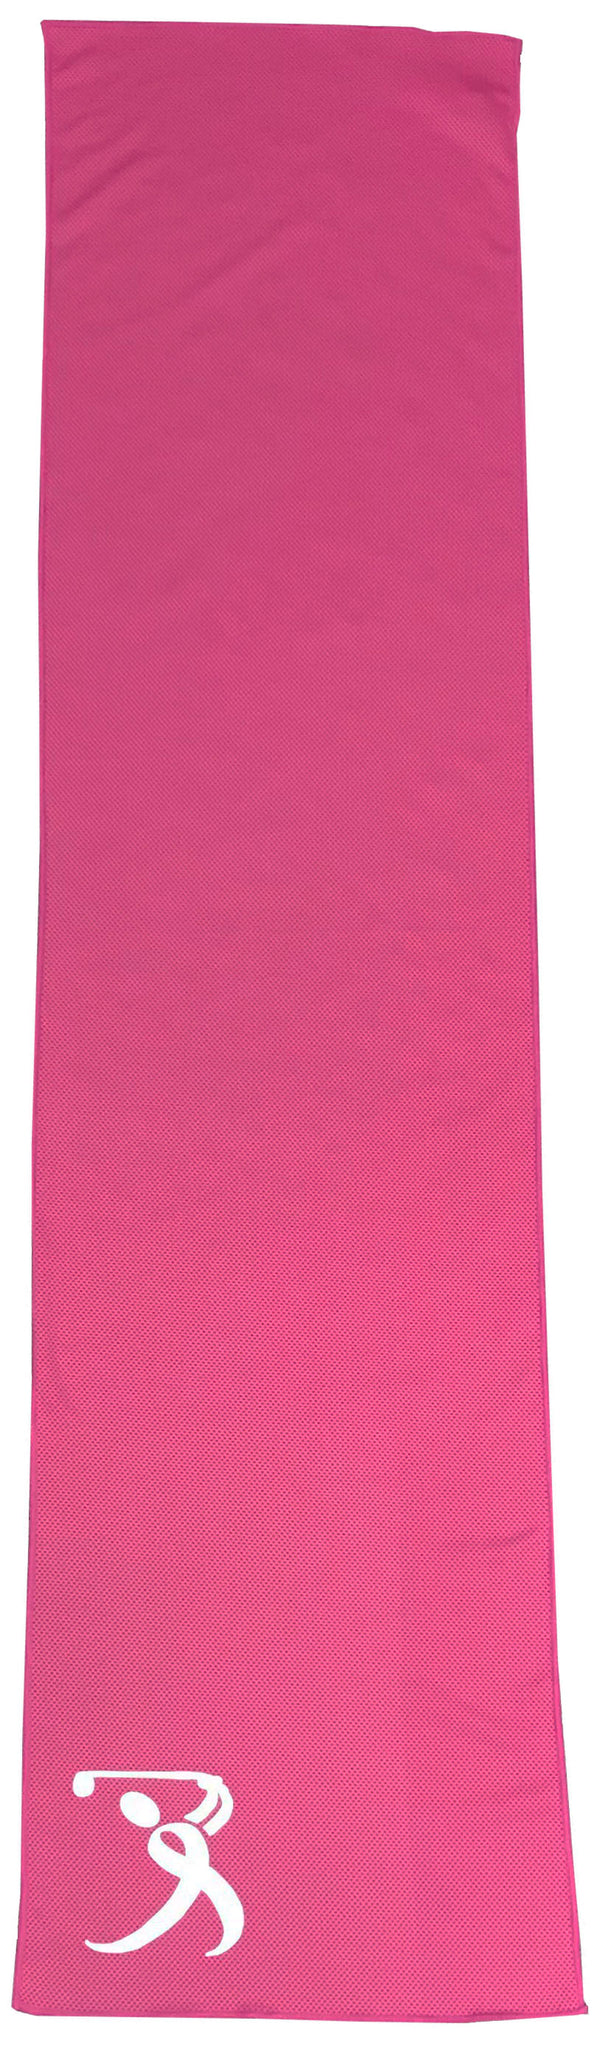 pink ribbon golfer cooling towel Size: 48